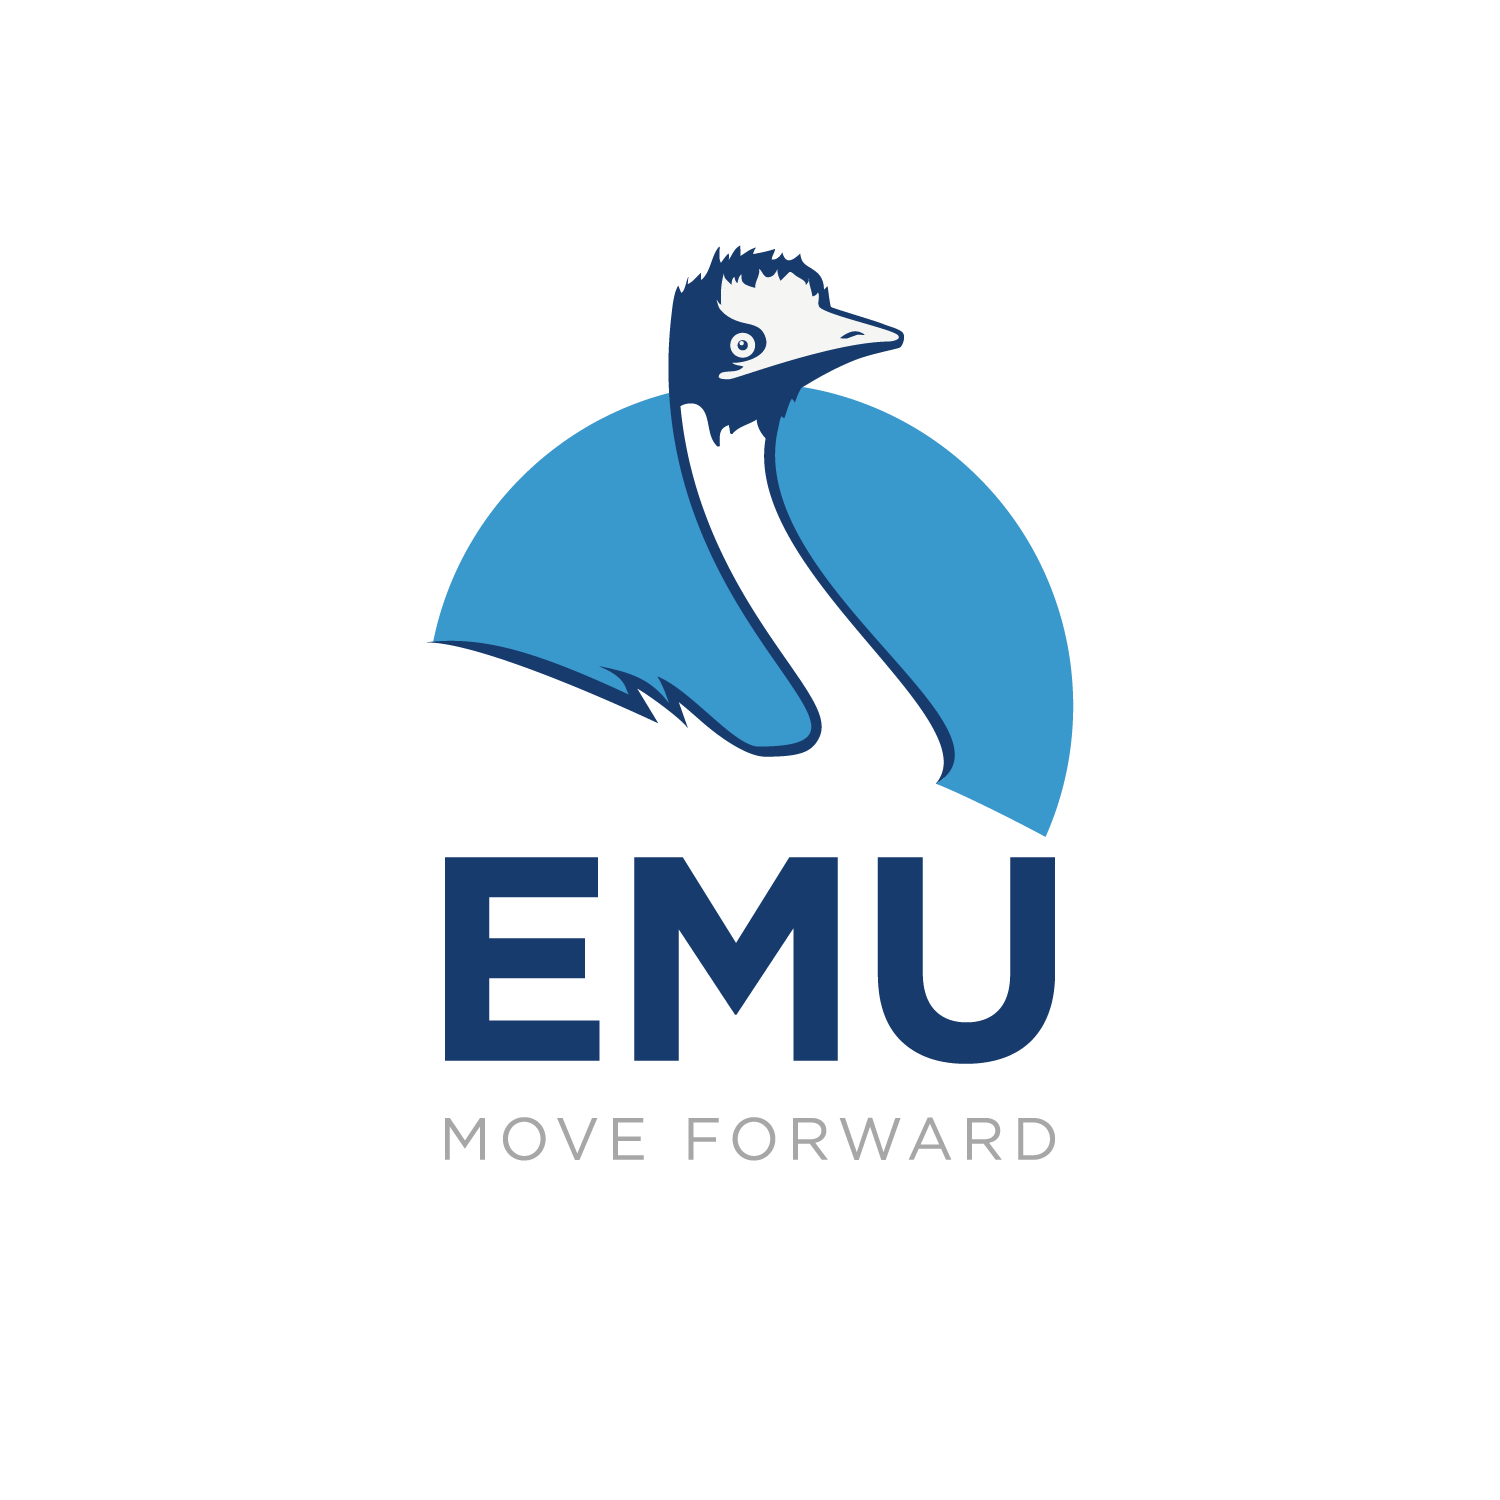 Emu Logo - Business Logo Design for EMU by phr43 | Design #10856933